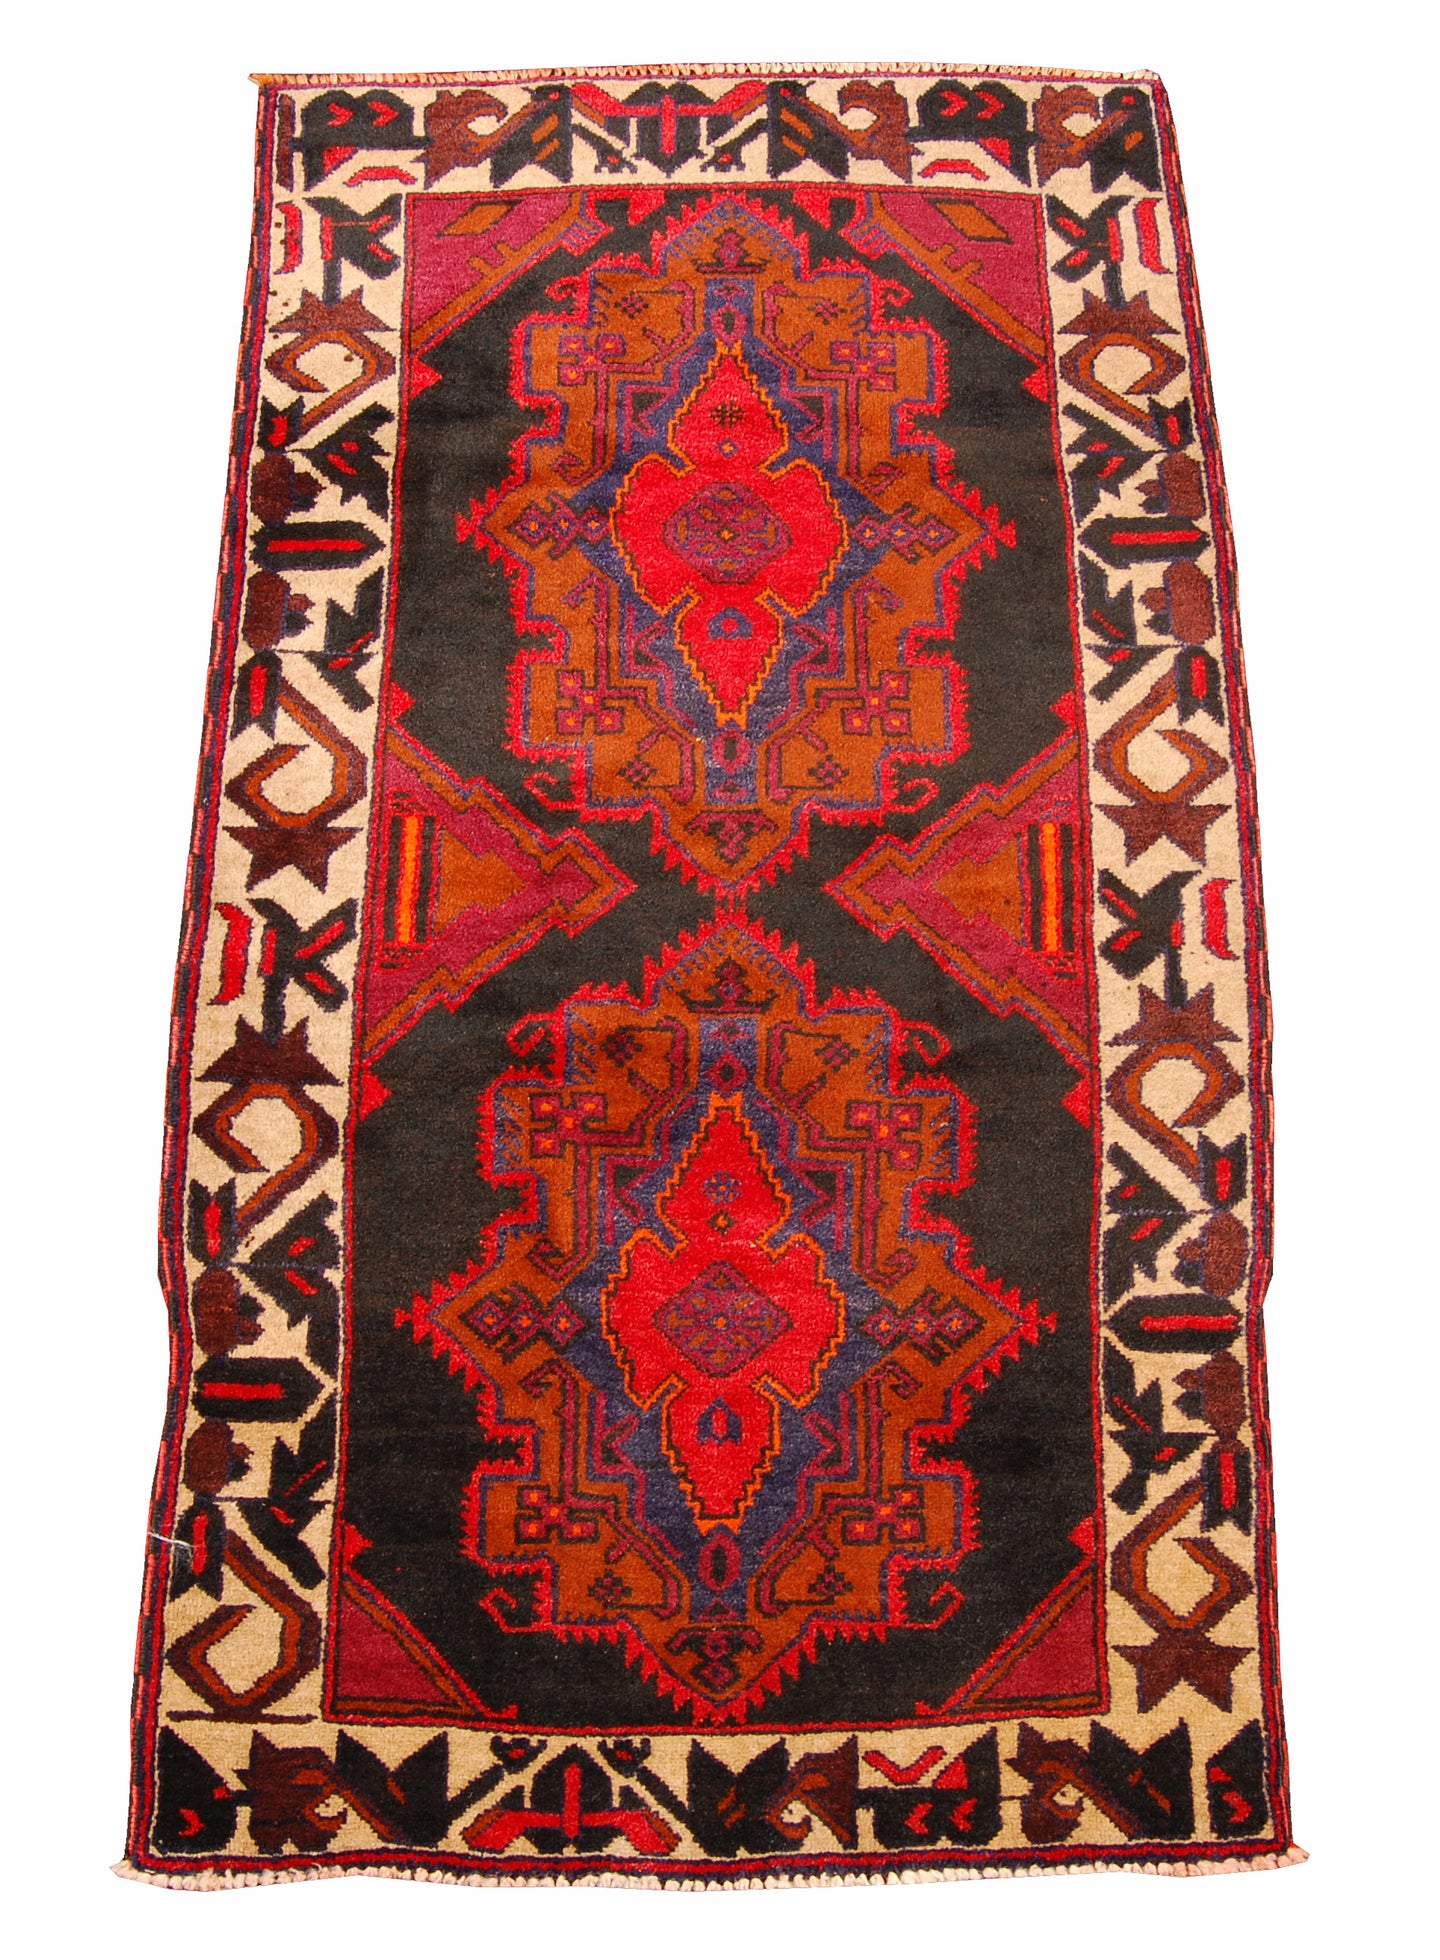 Genuine, Original Pure Wool Rug Rustic Handmad Carpet CM 170x90